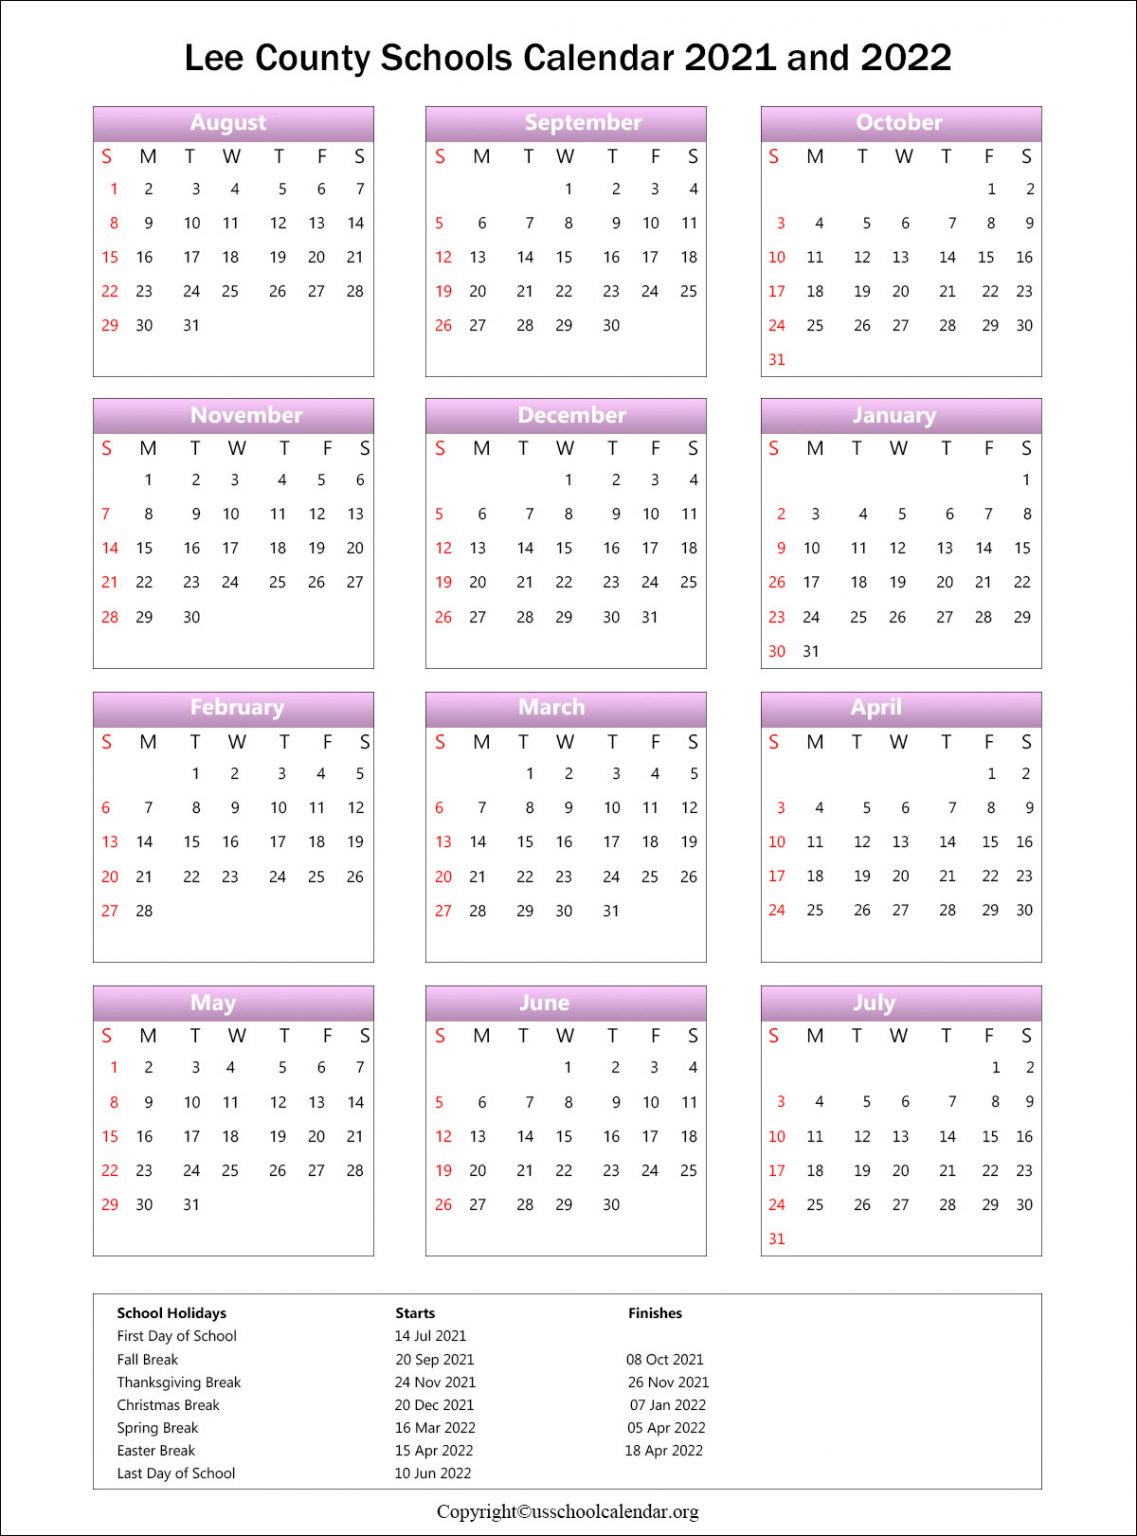 Lee County School Calendar with Holidays 20212022